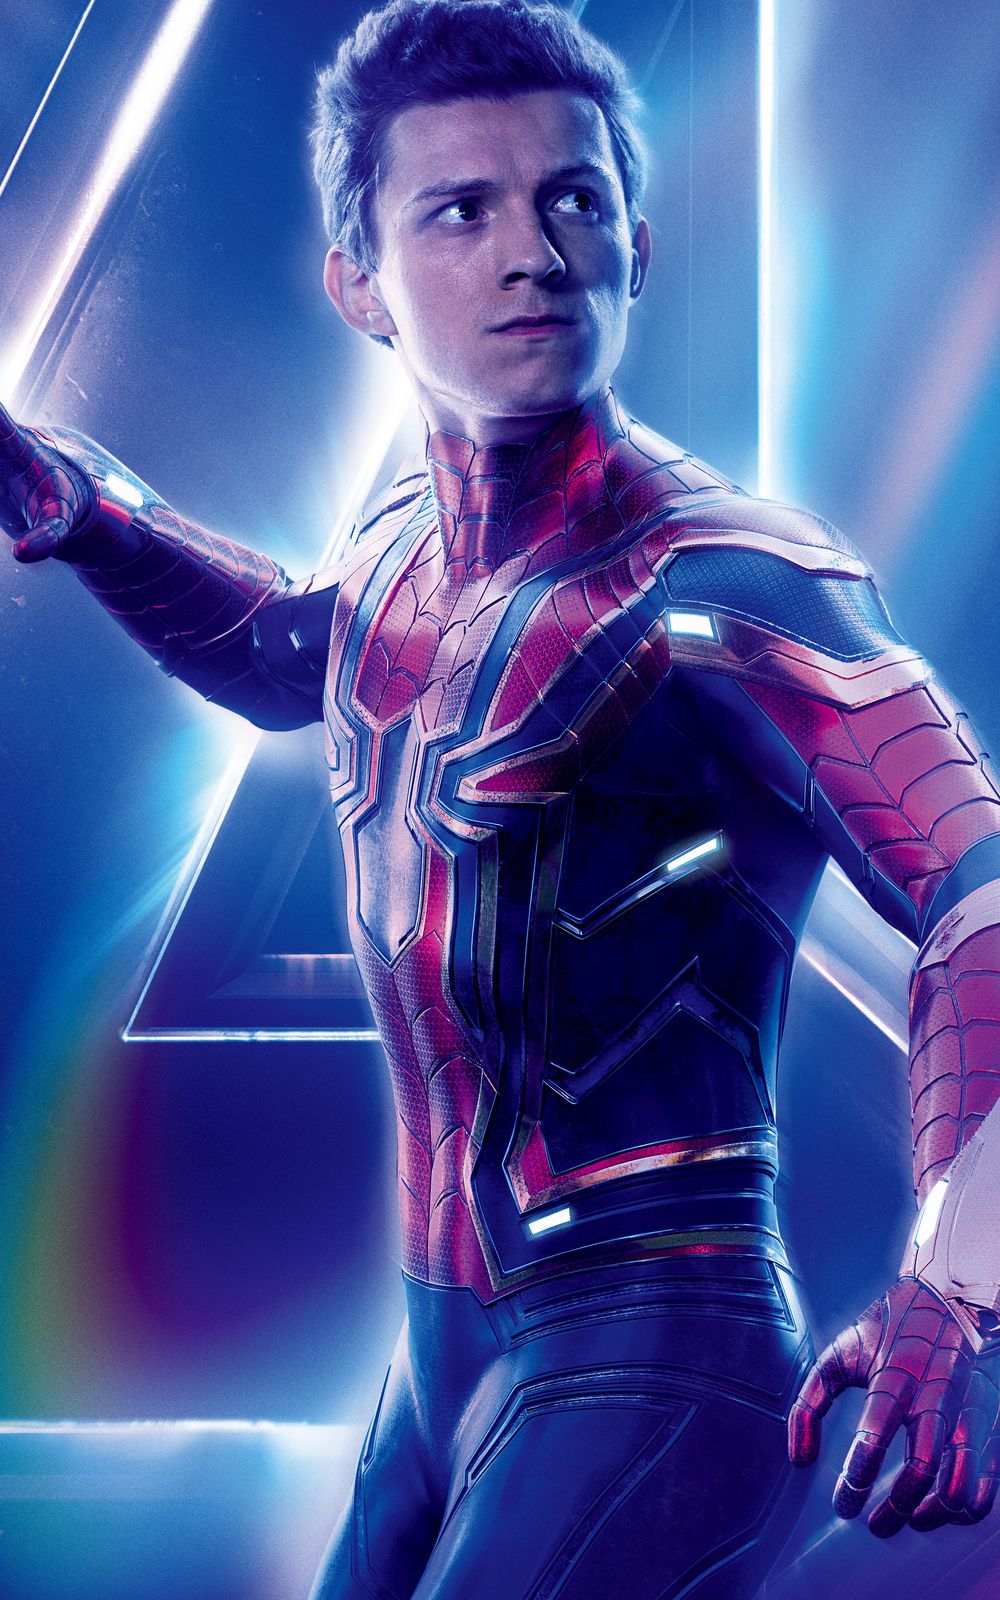 Tom Holland as Spider-Man Infinity War 10-16